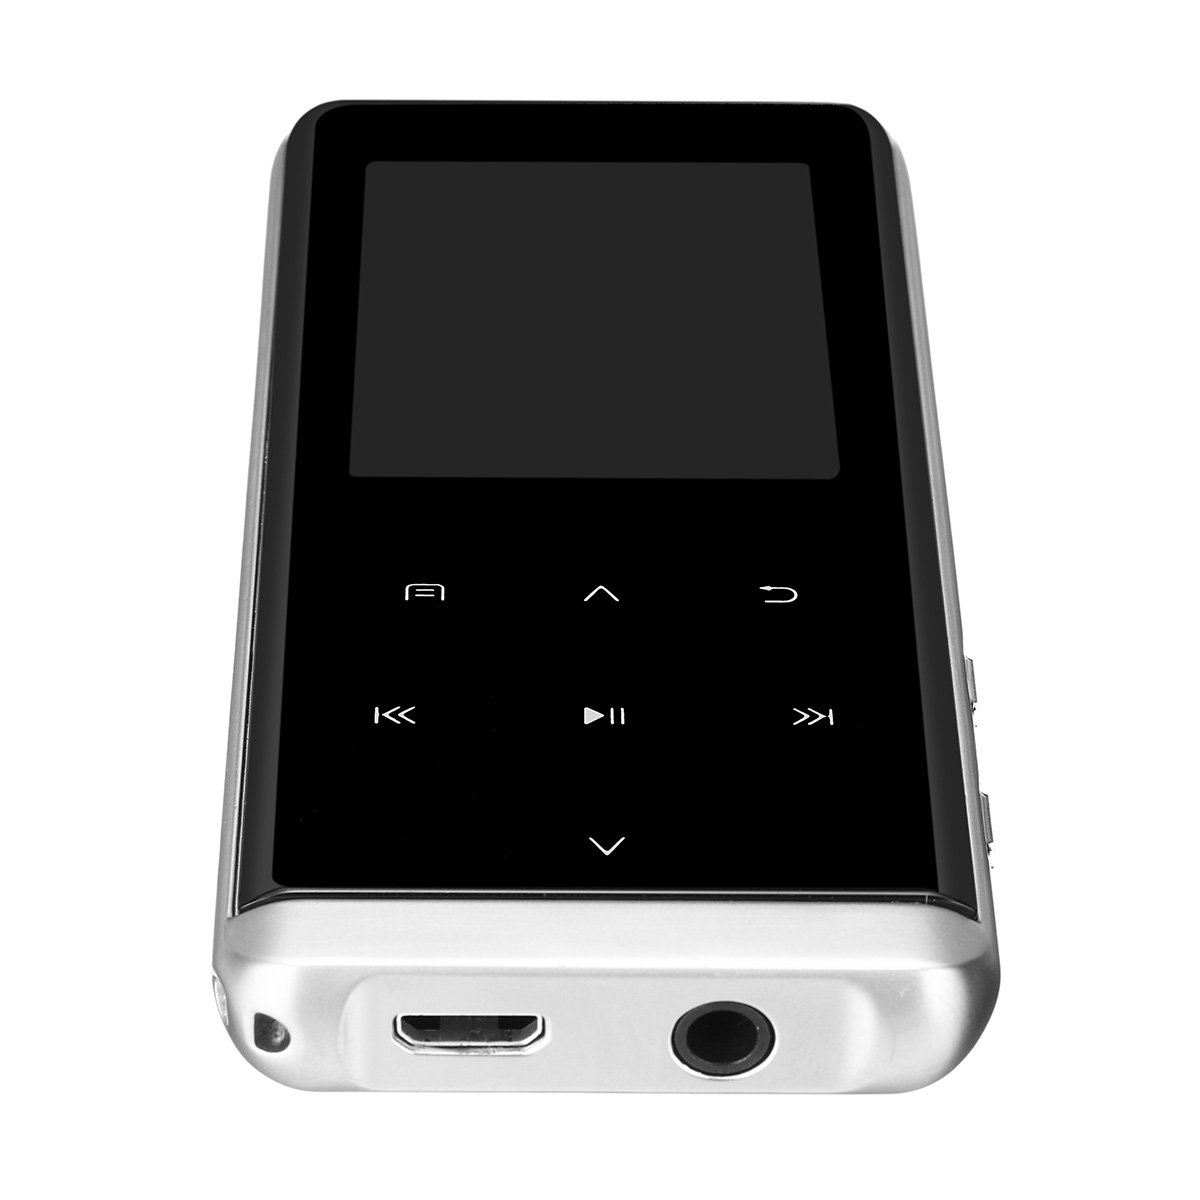 JNN M13 Bluetooth Lossless MP3 Player MP4 Audio Video Music Player FM Radio E-Book